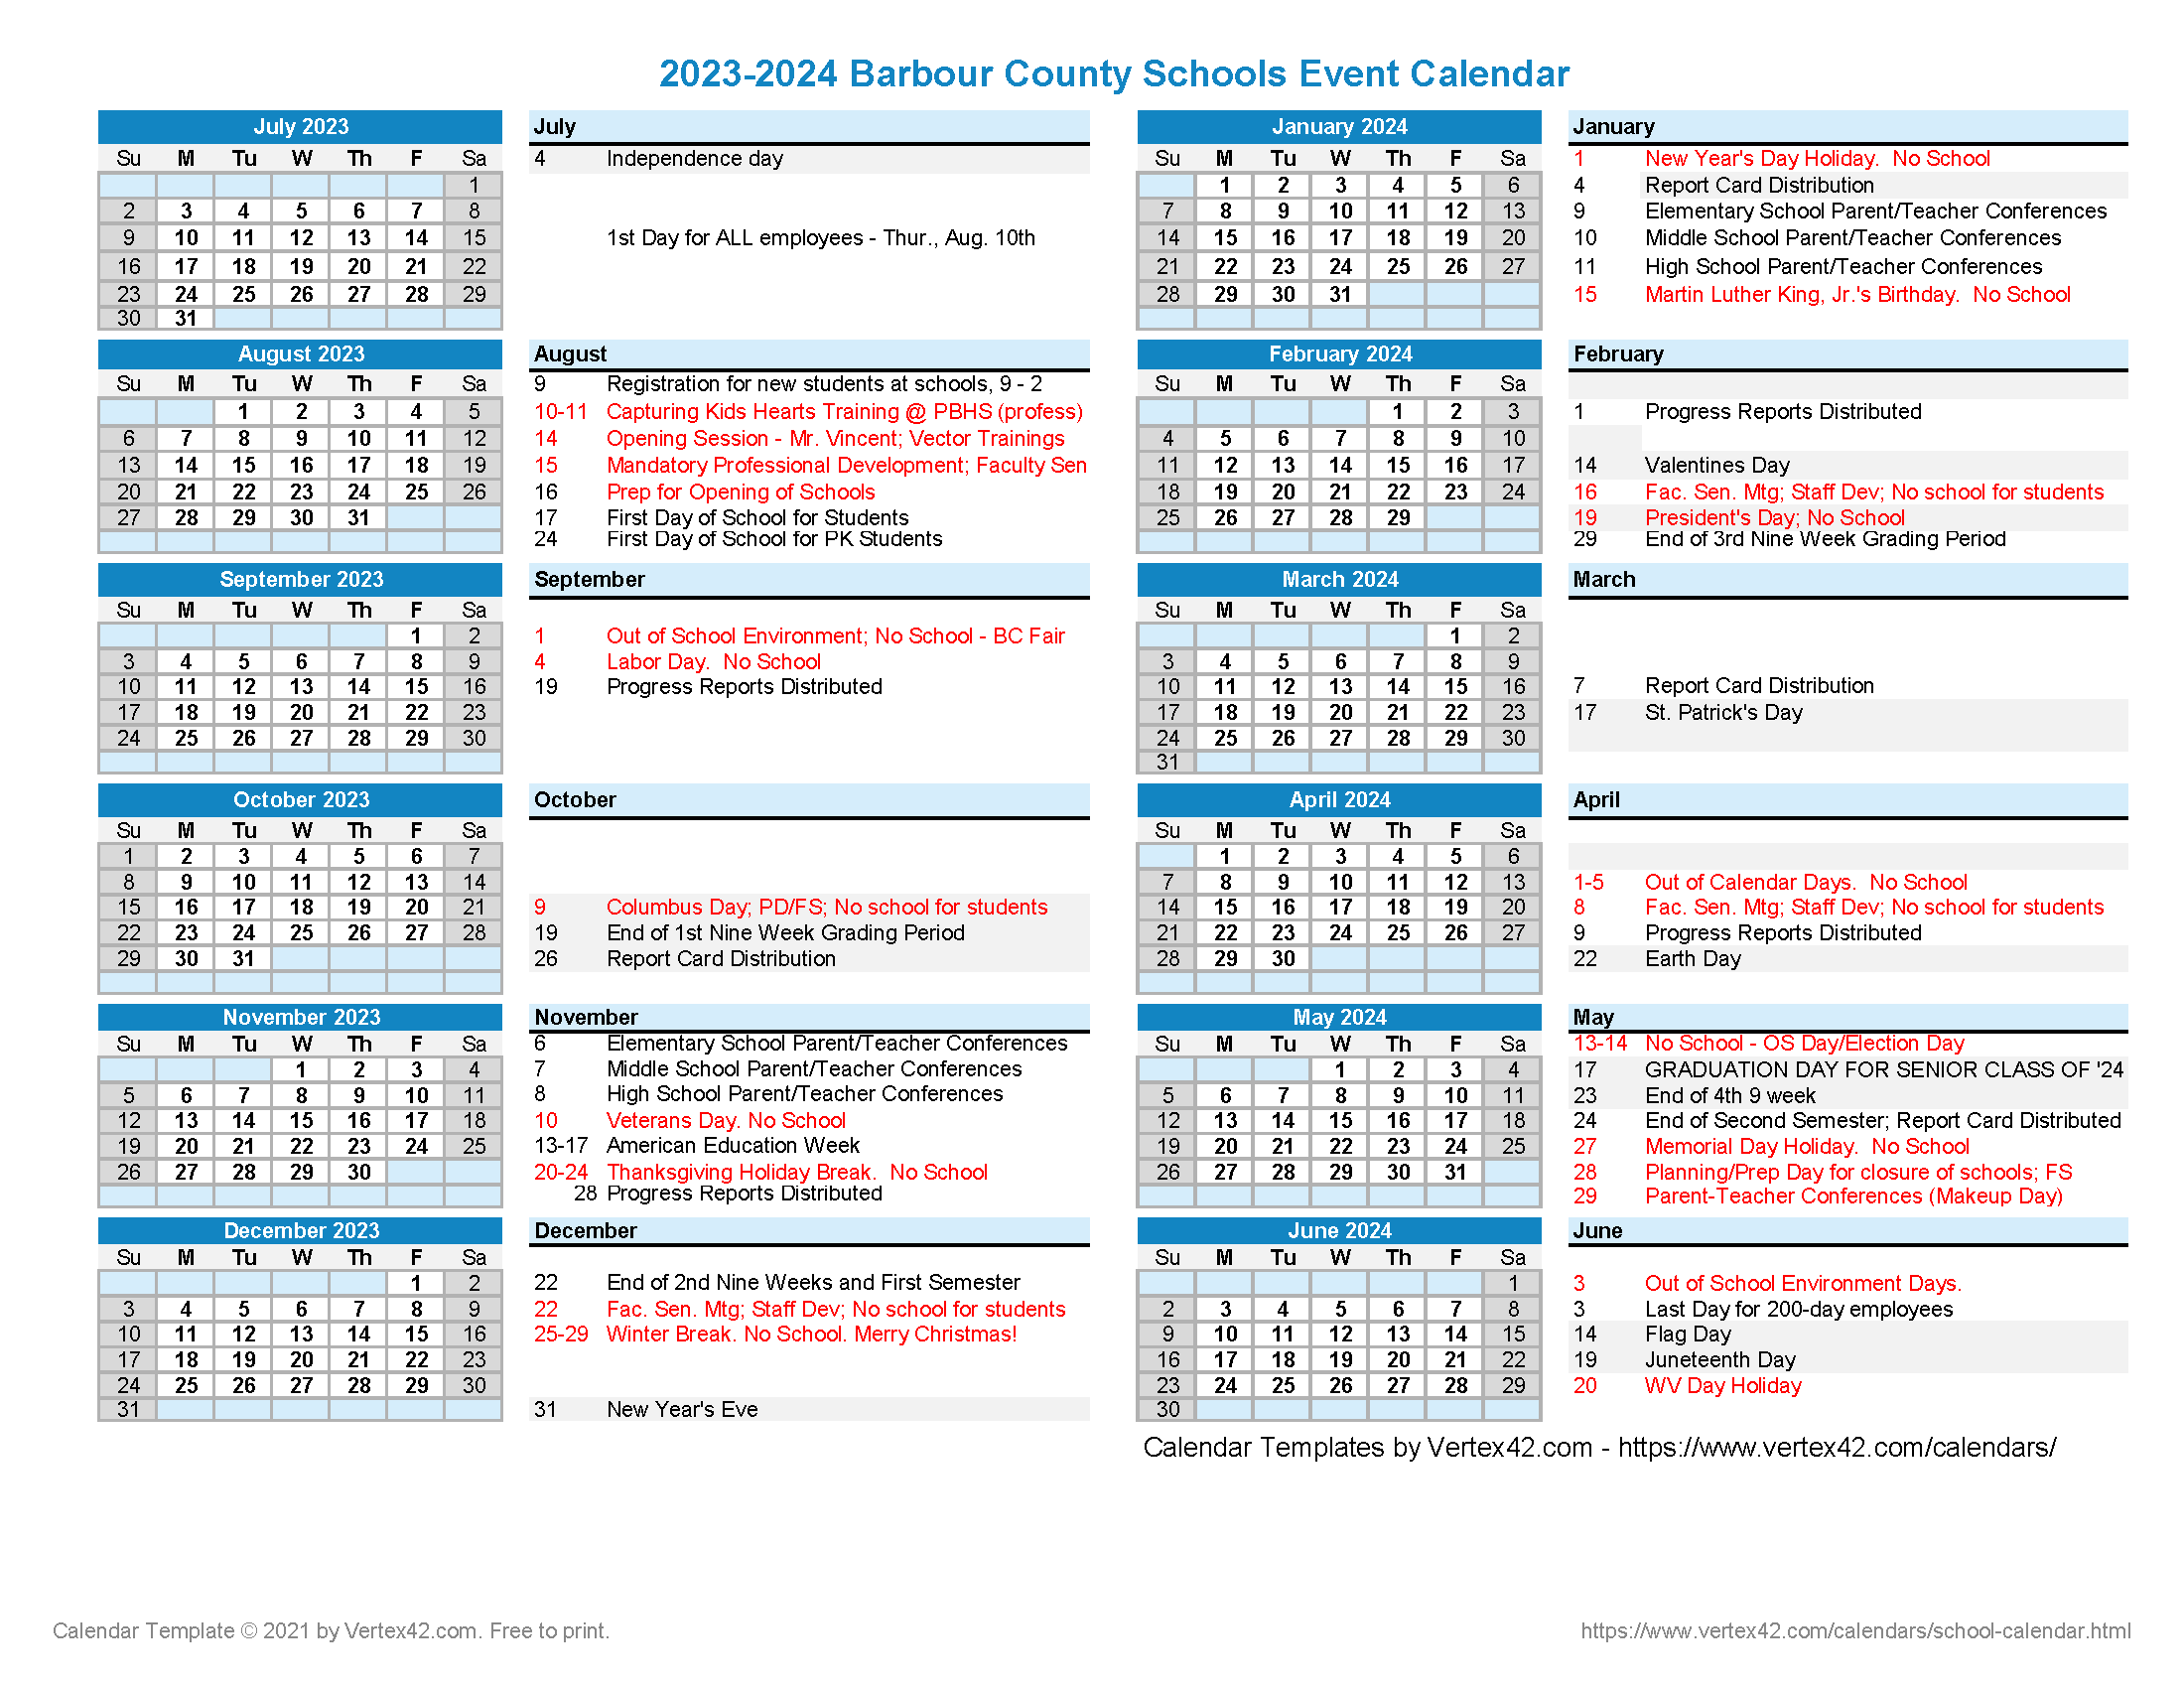 2023-2024 Calendar Synopsis